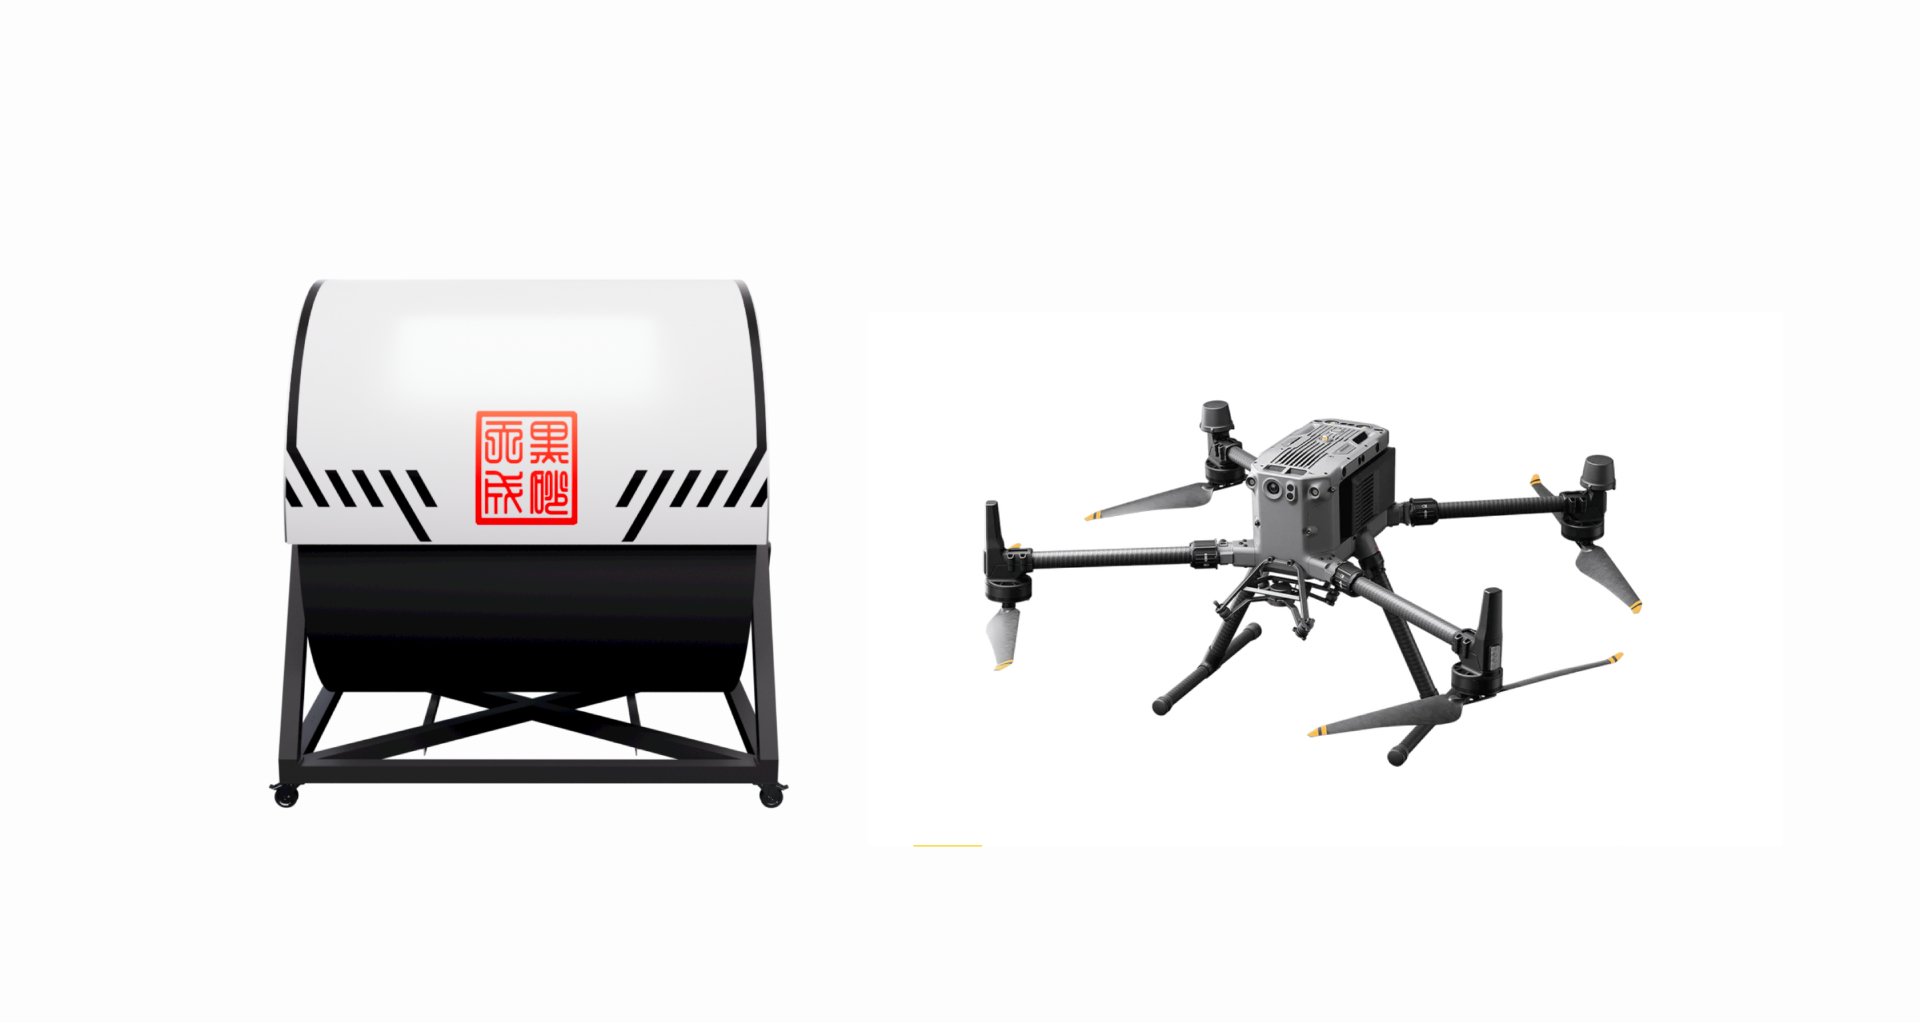 HEISHA drone dock is compatible with DJI M350